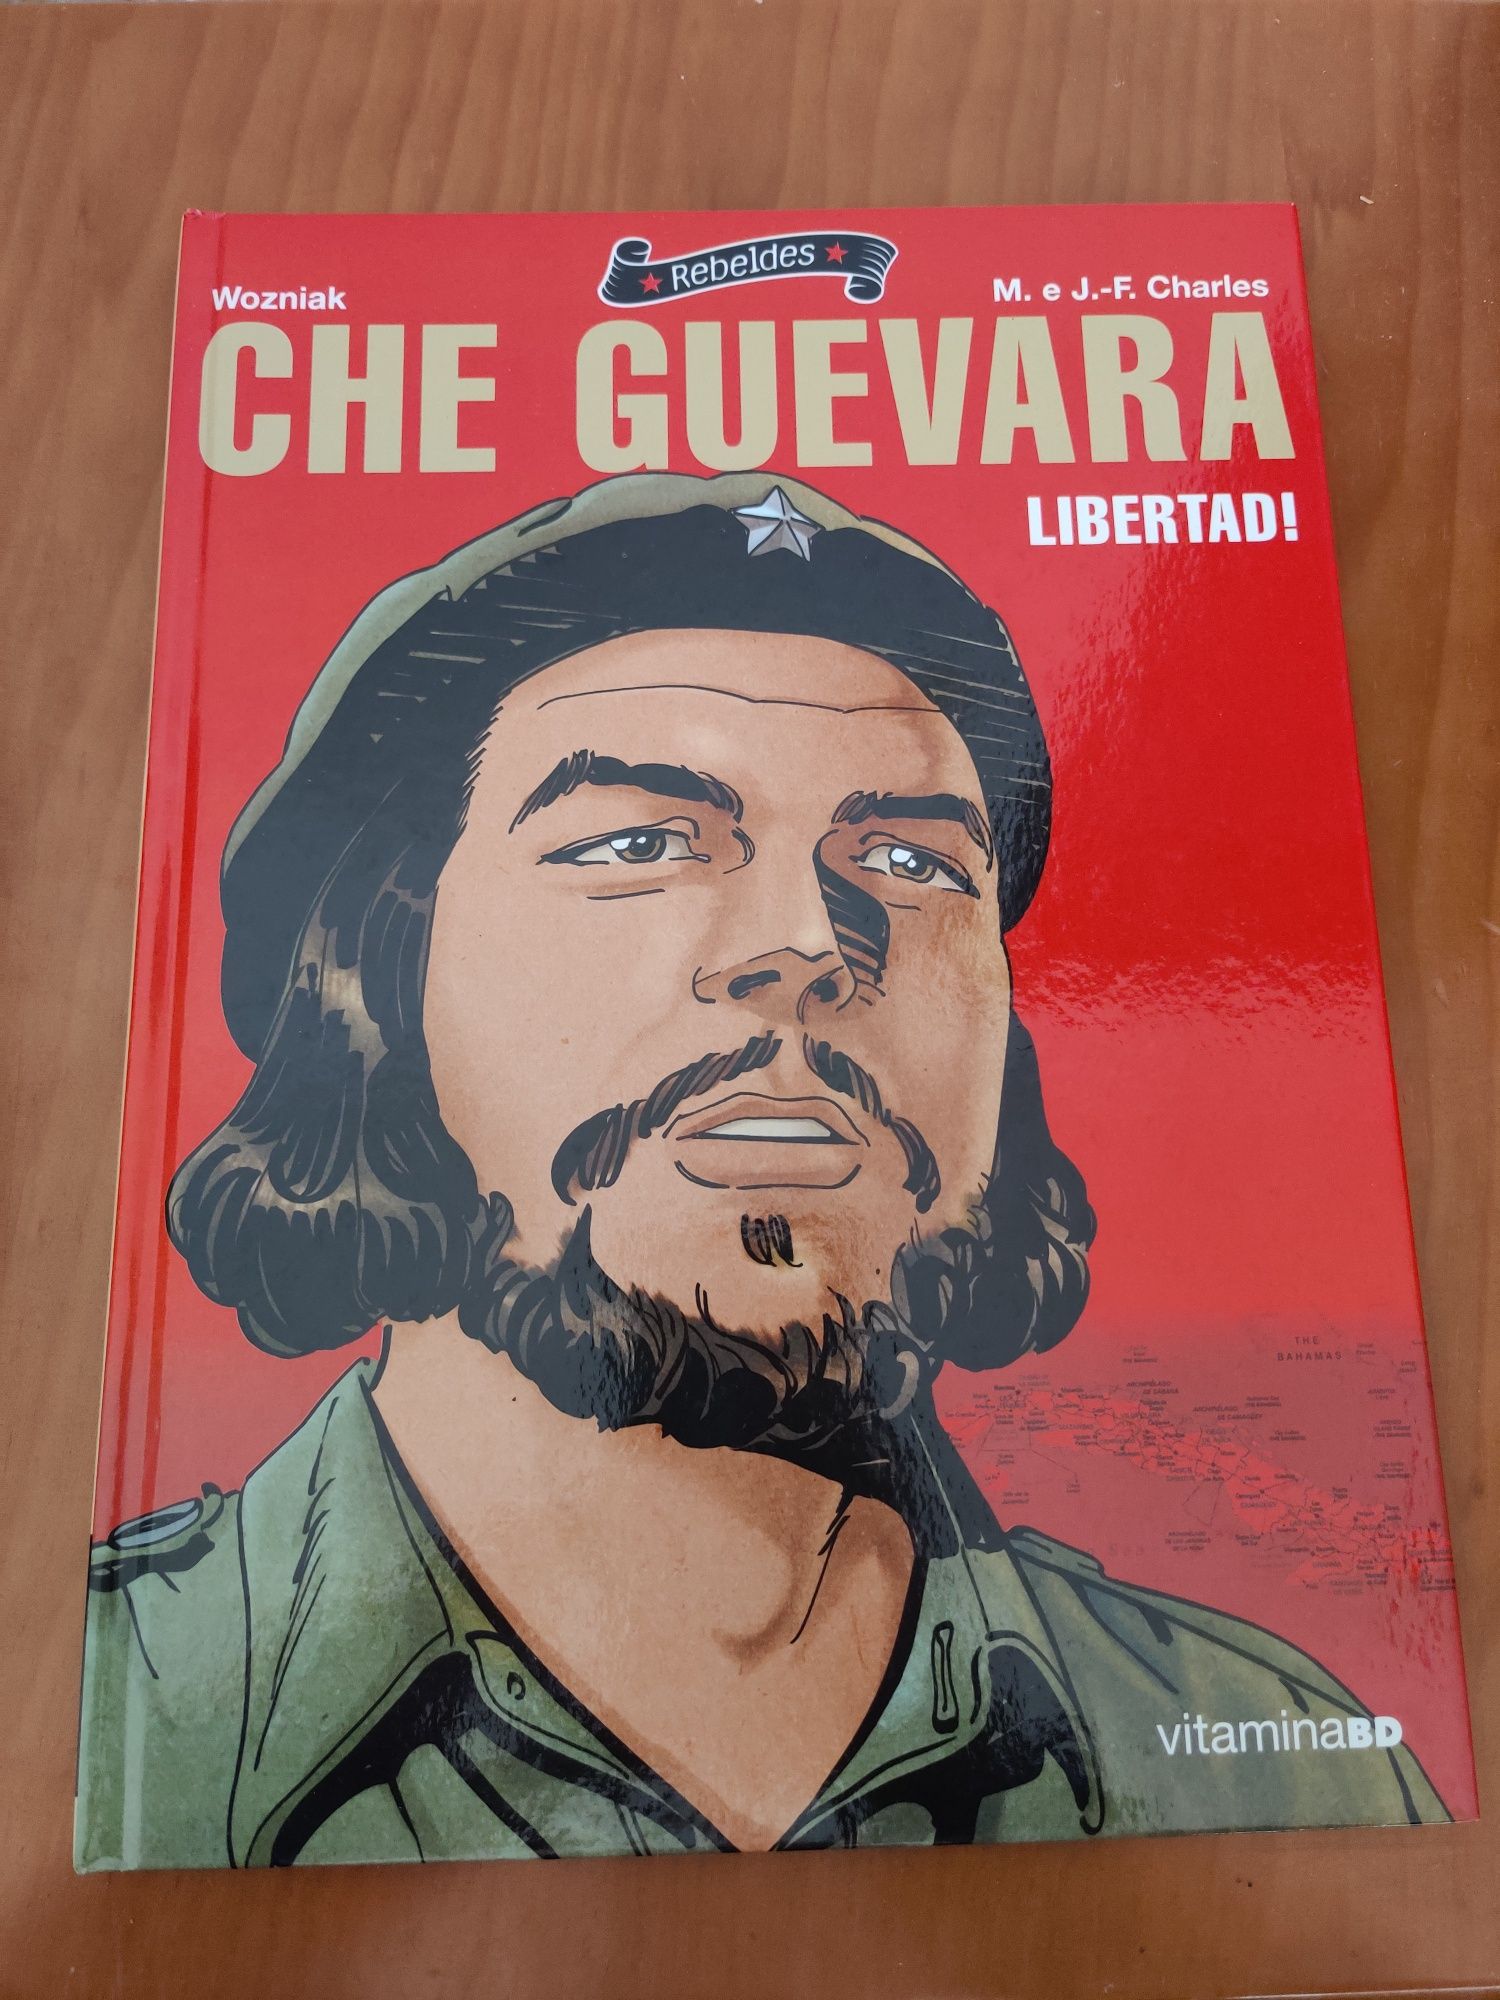 Che Guevara - LIBERTAD! (Wozniak, M e J. -F. Charles)